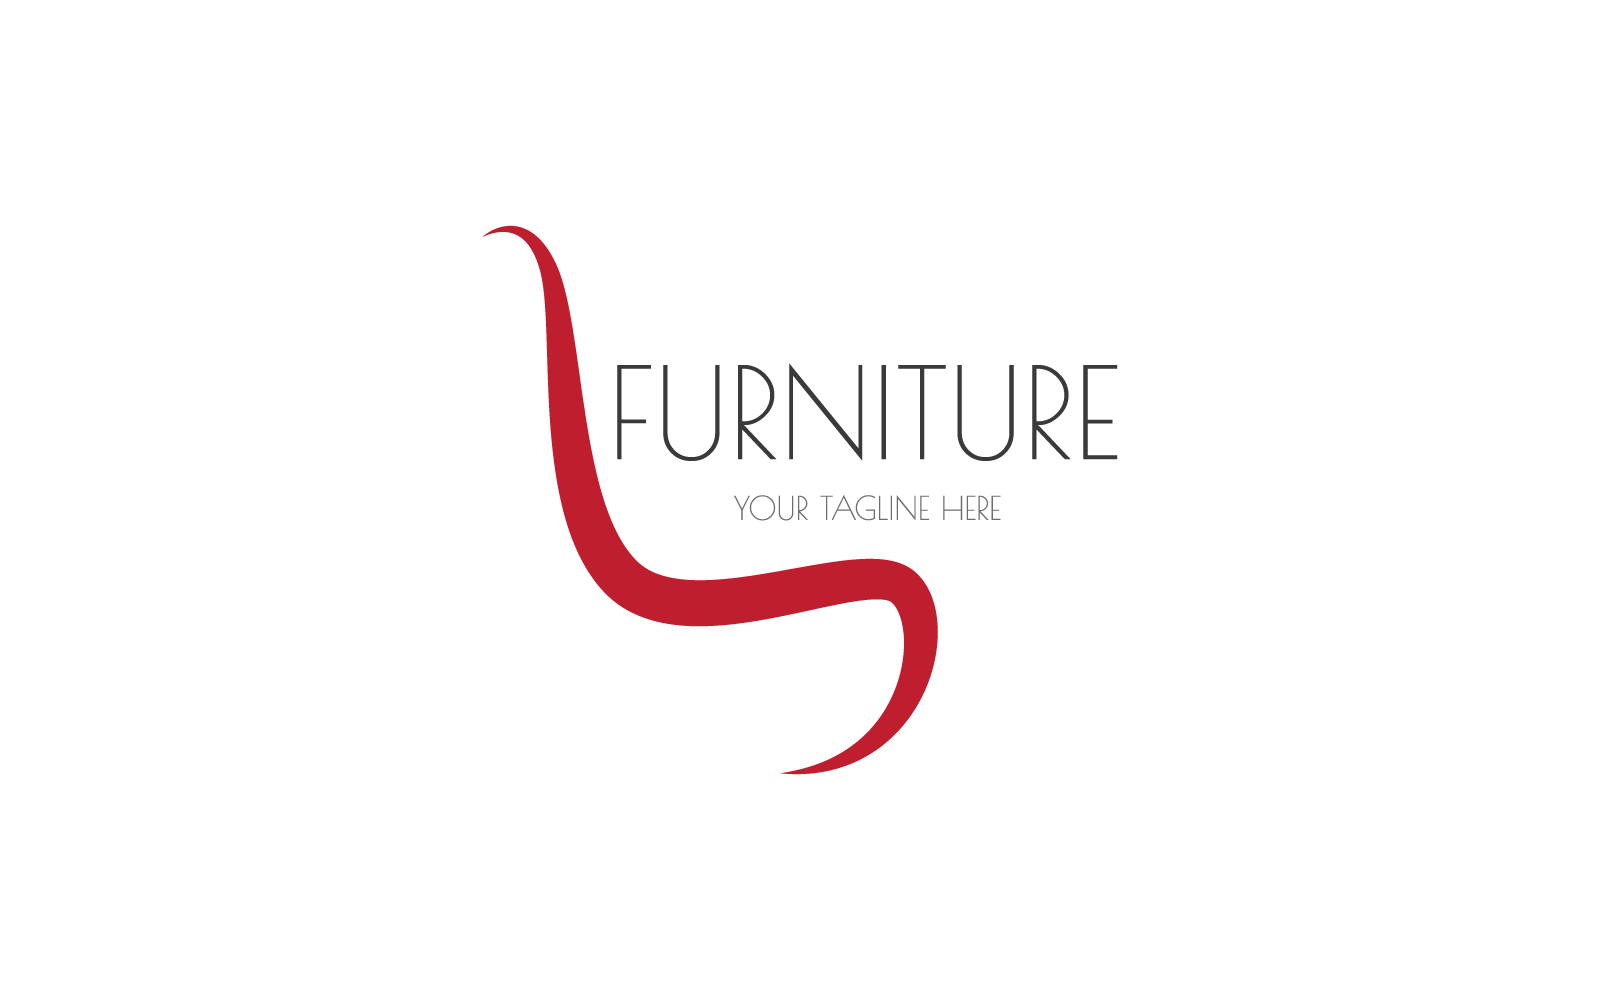 Furniture illustration design vector template